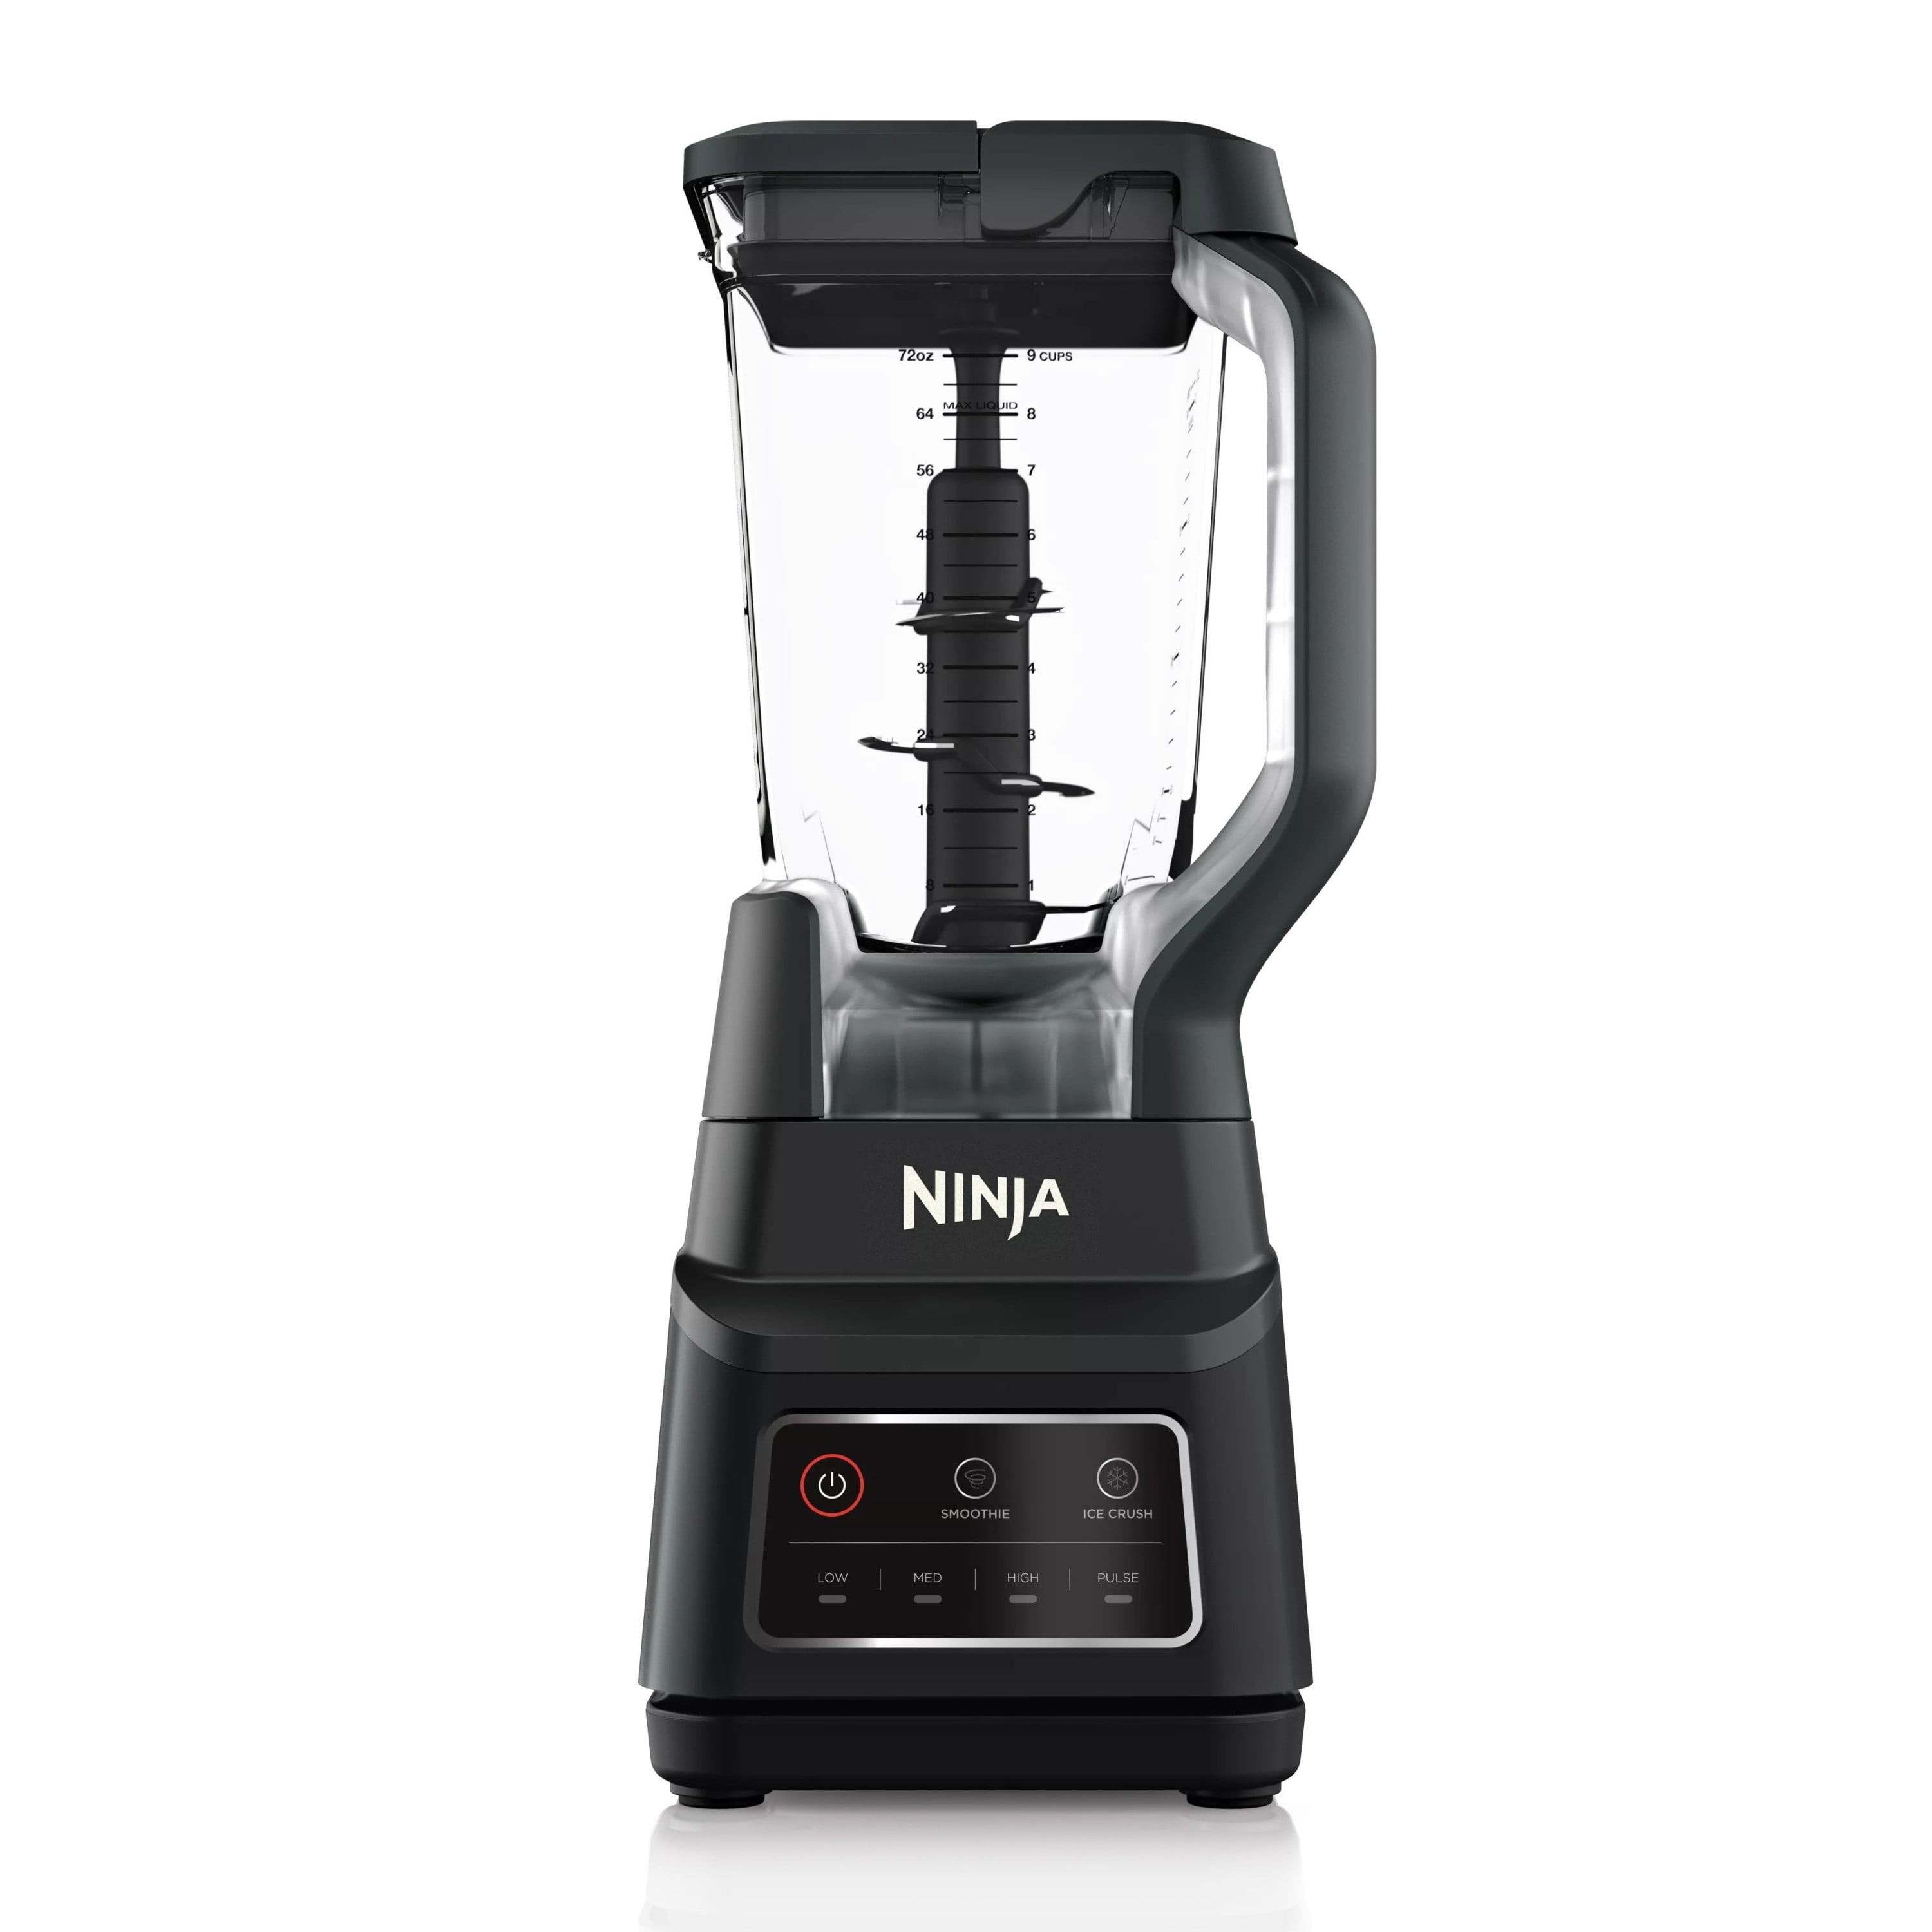 Ninja Nutri Pro Personal Blender with Auto-iQ